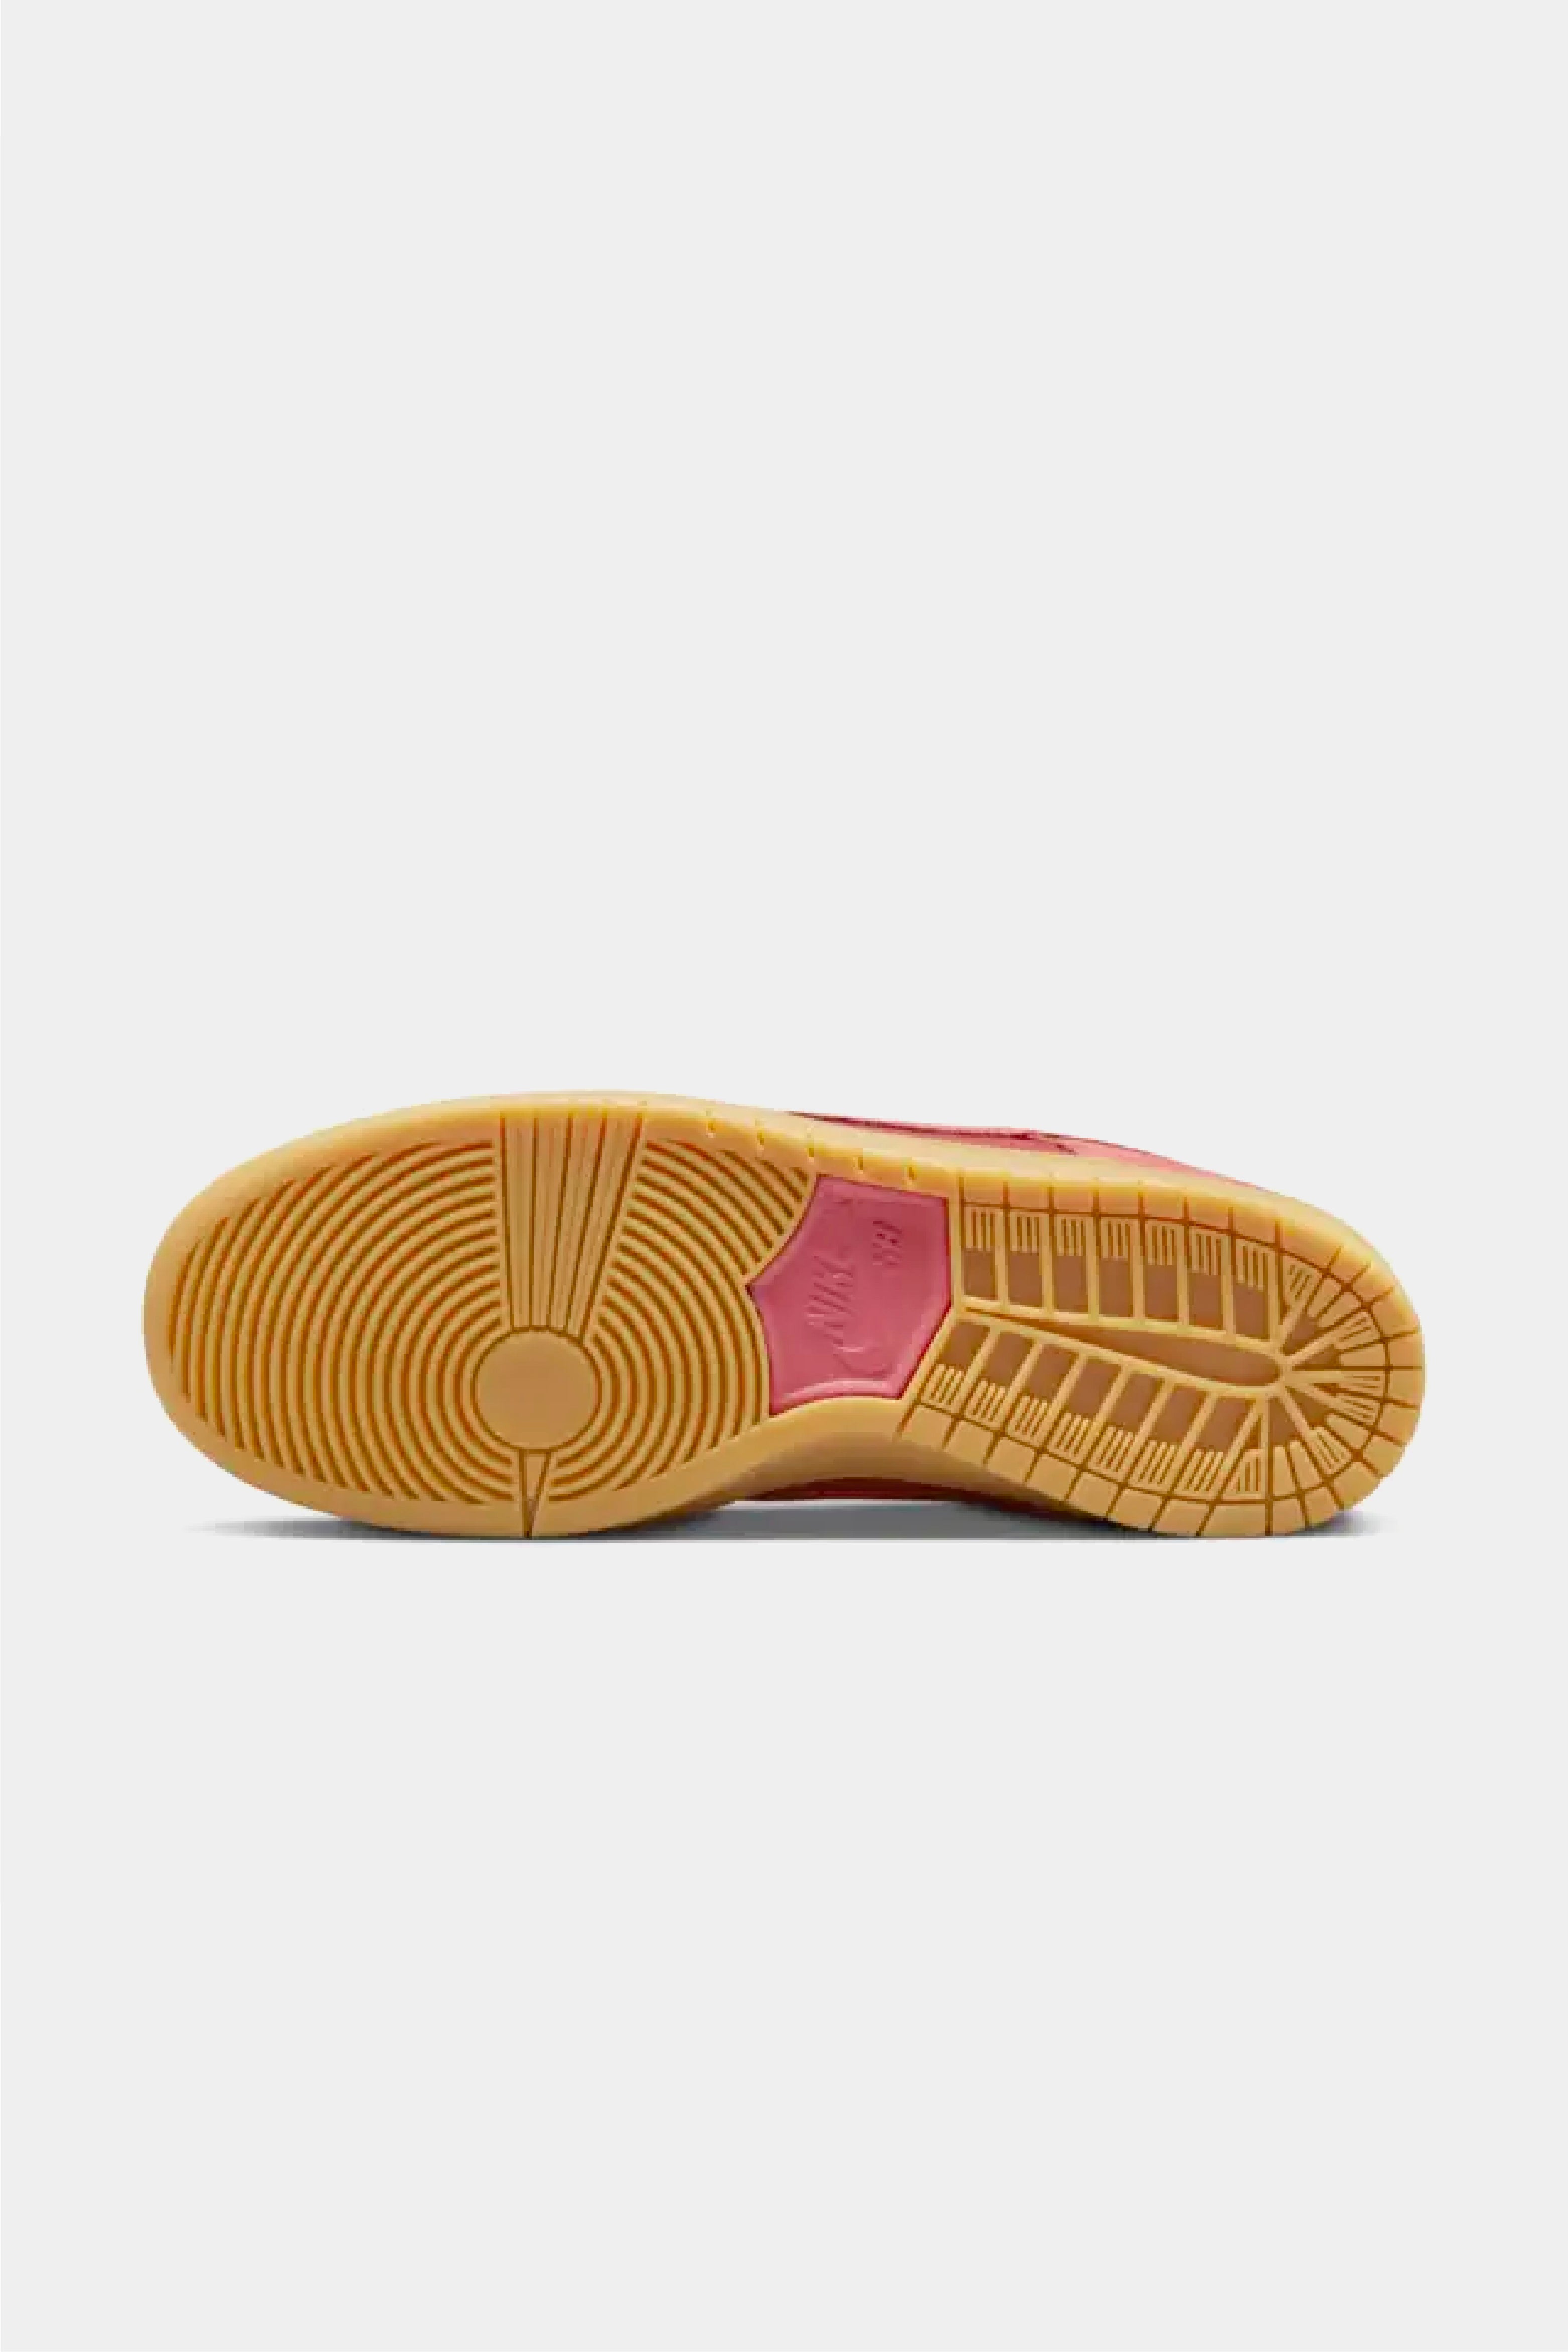 Selectshop FRAME - NIKE SB Nike SB Dunk Low "Adobe" Footwear Concept Store Dubai